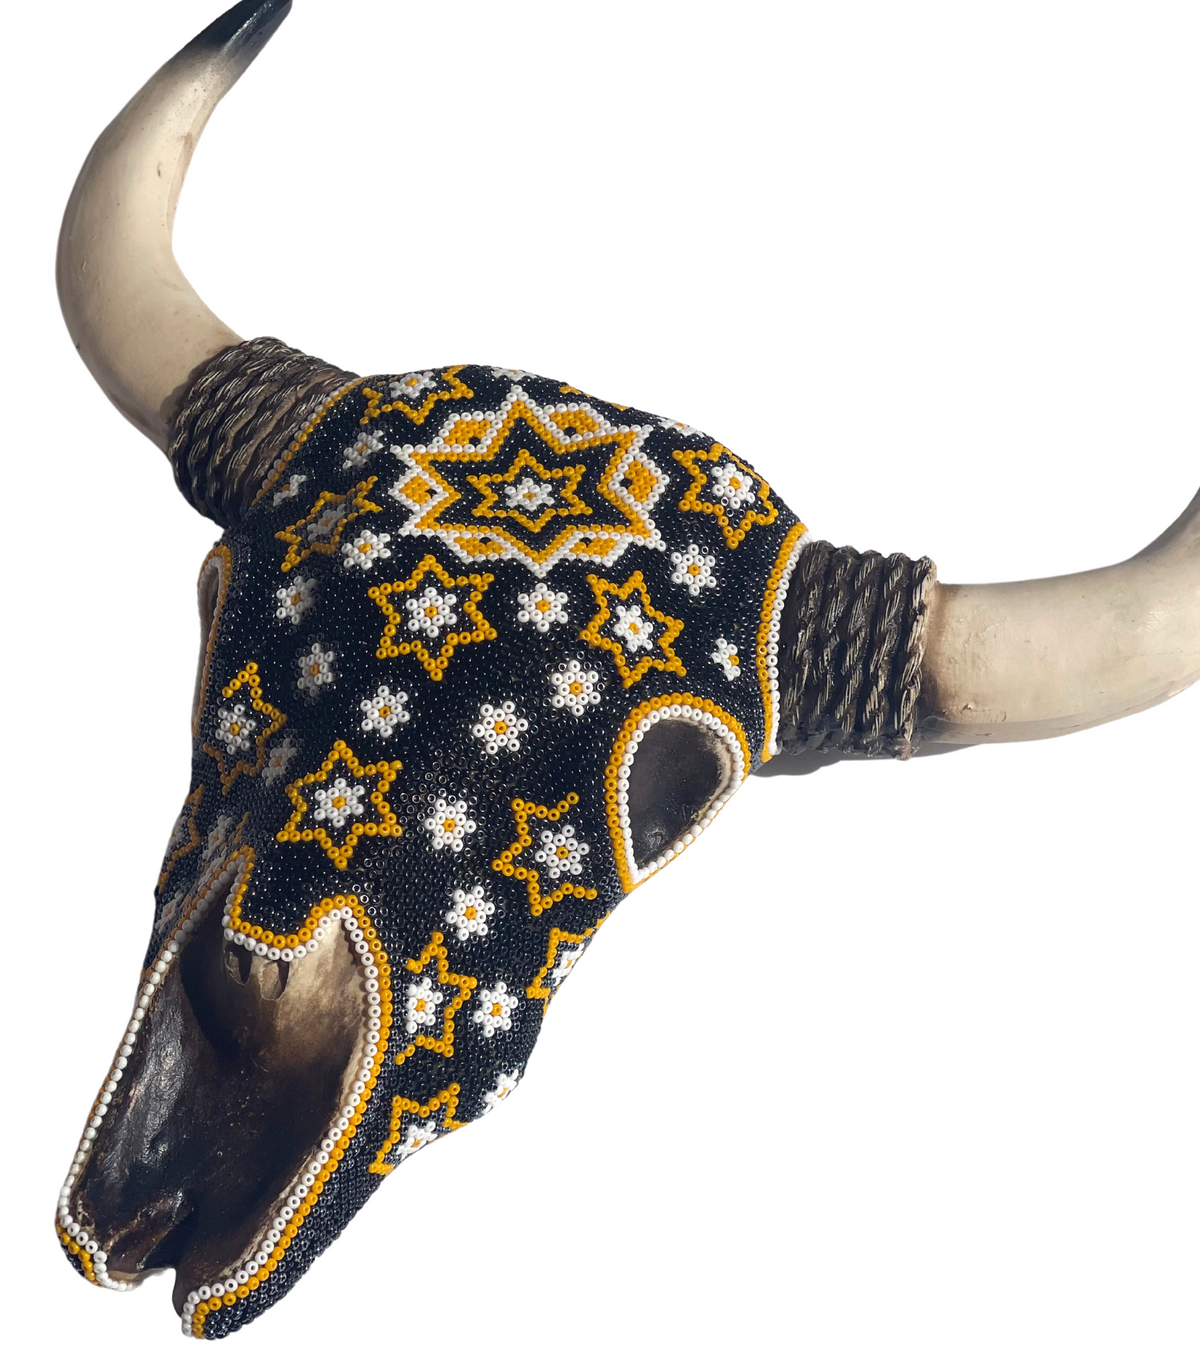 Cabeza de toro chica decorada con arte huichol